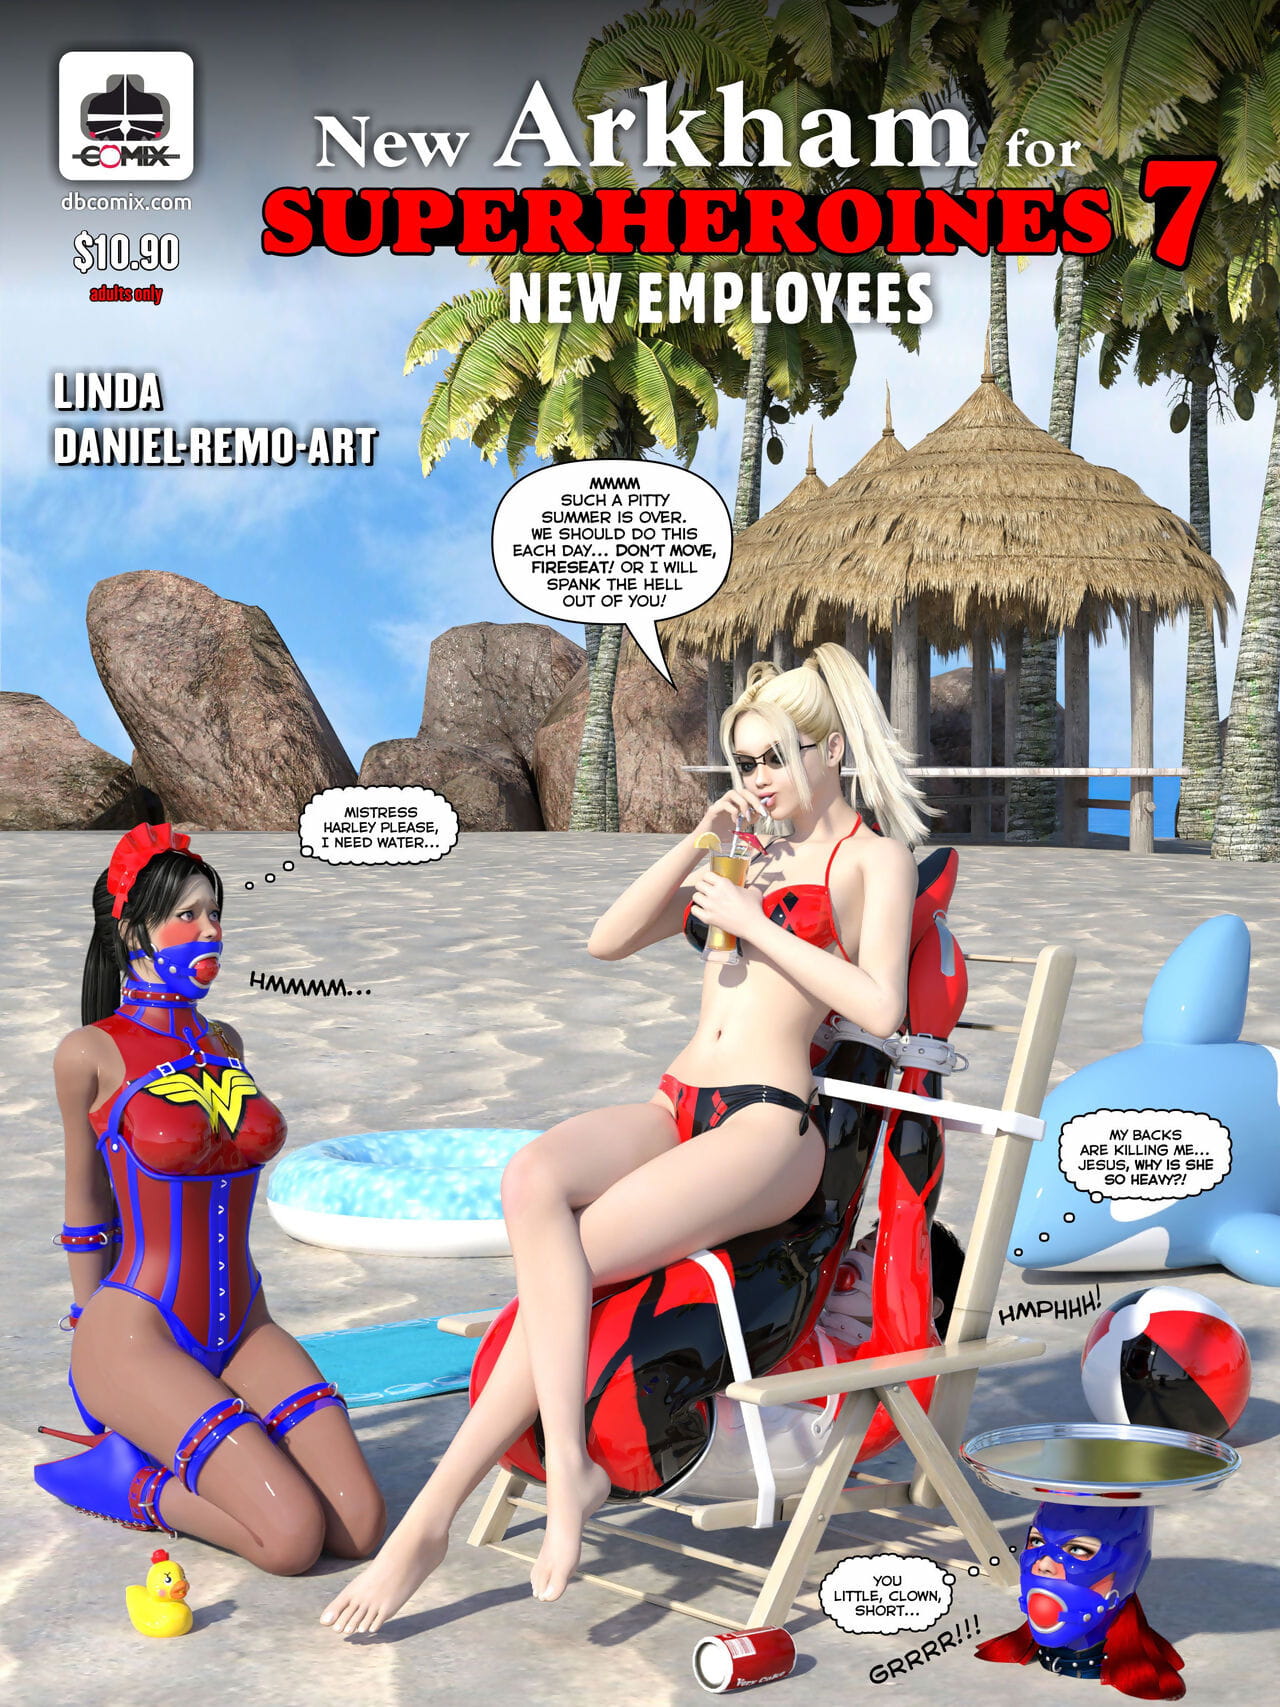 nuovo arkham per superheroines 7 - nuovo dipendenti page 1